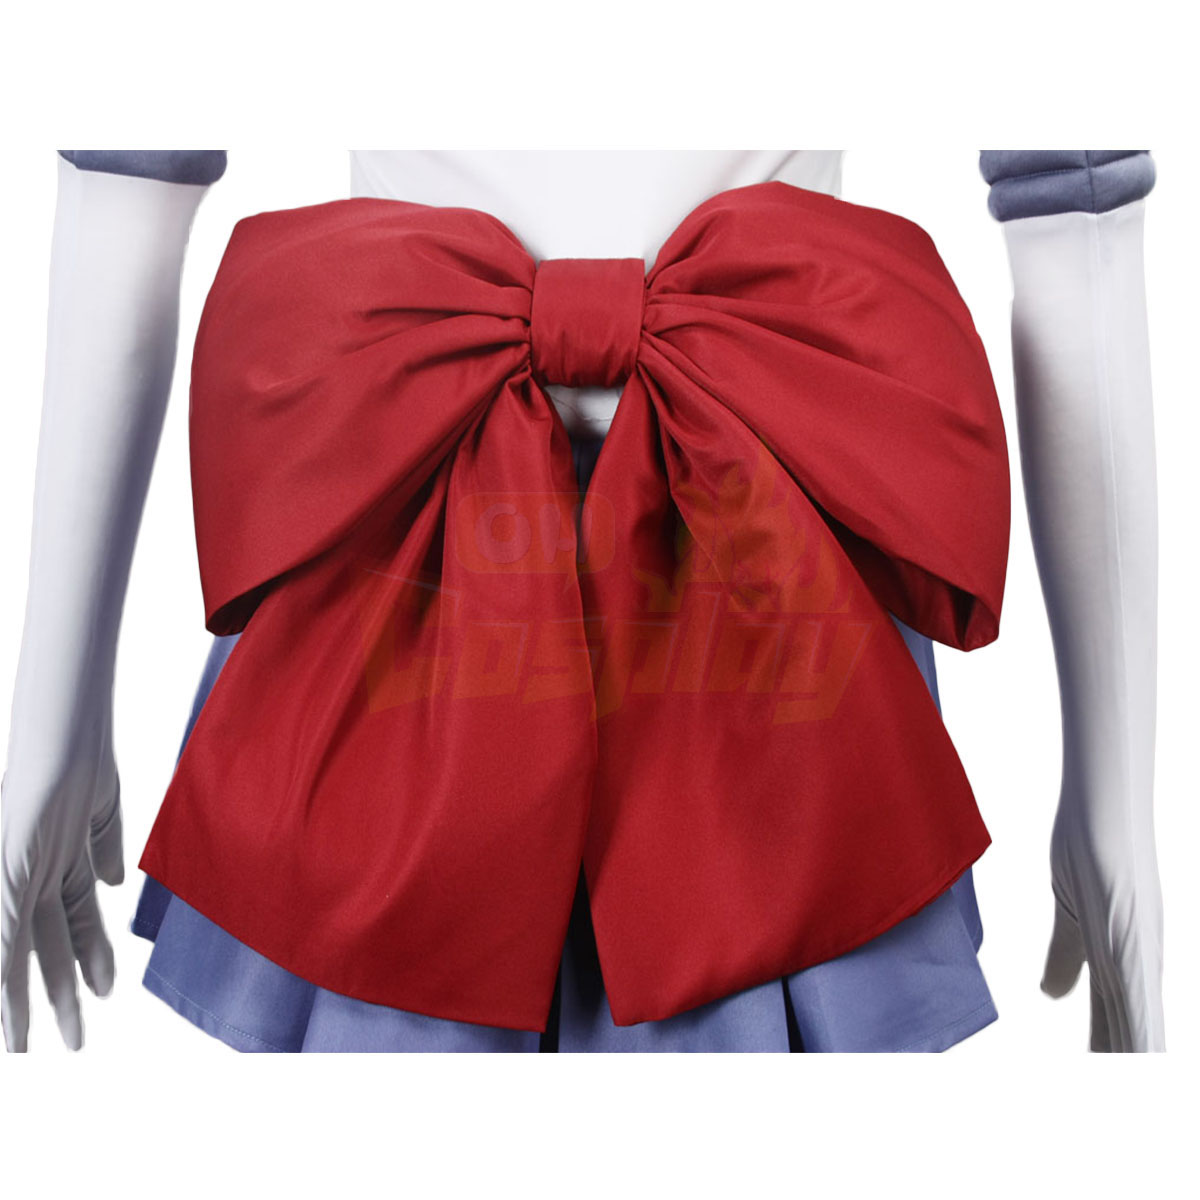 Sailor Moon Hotaru Tomoe 1ST Cosplay Costumes Deluxe Edition